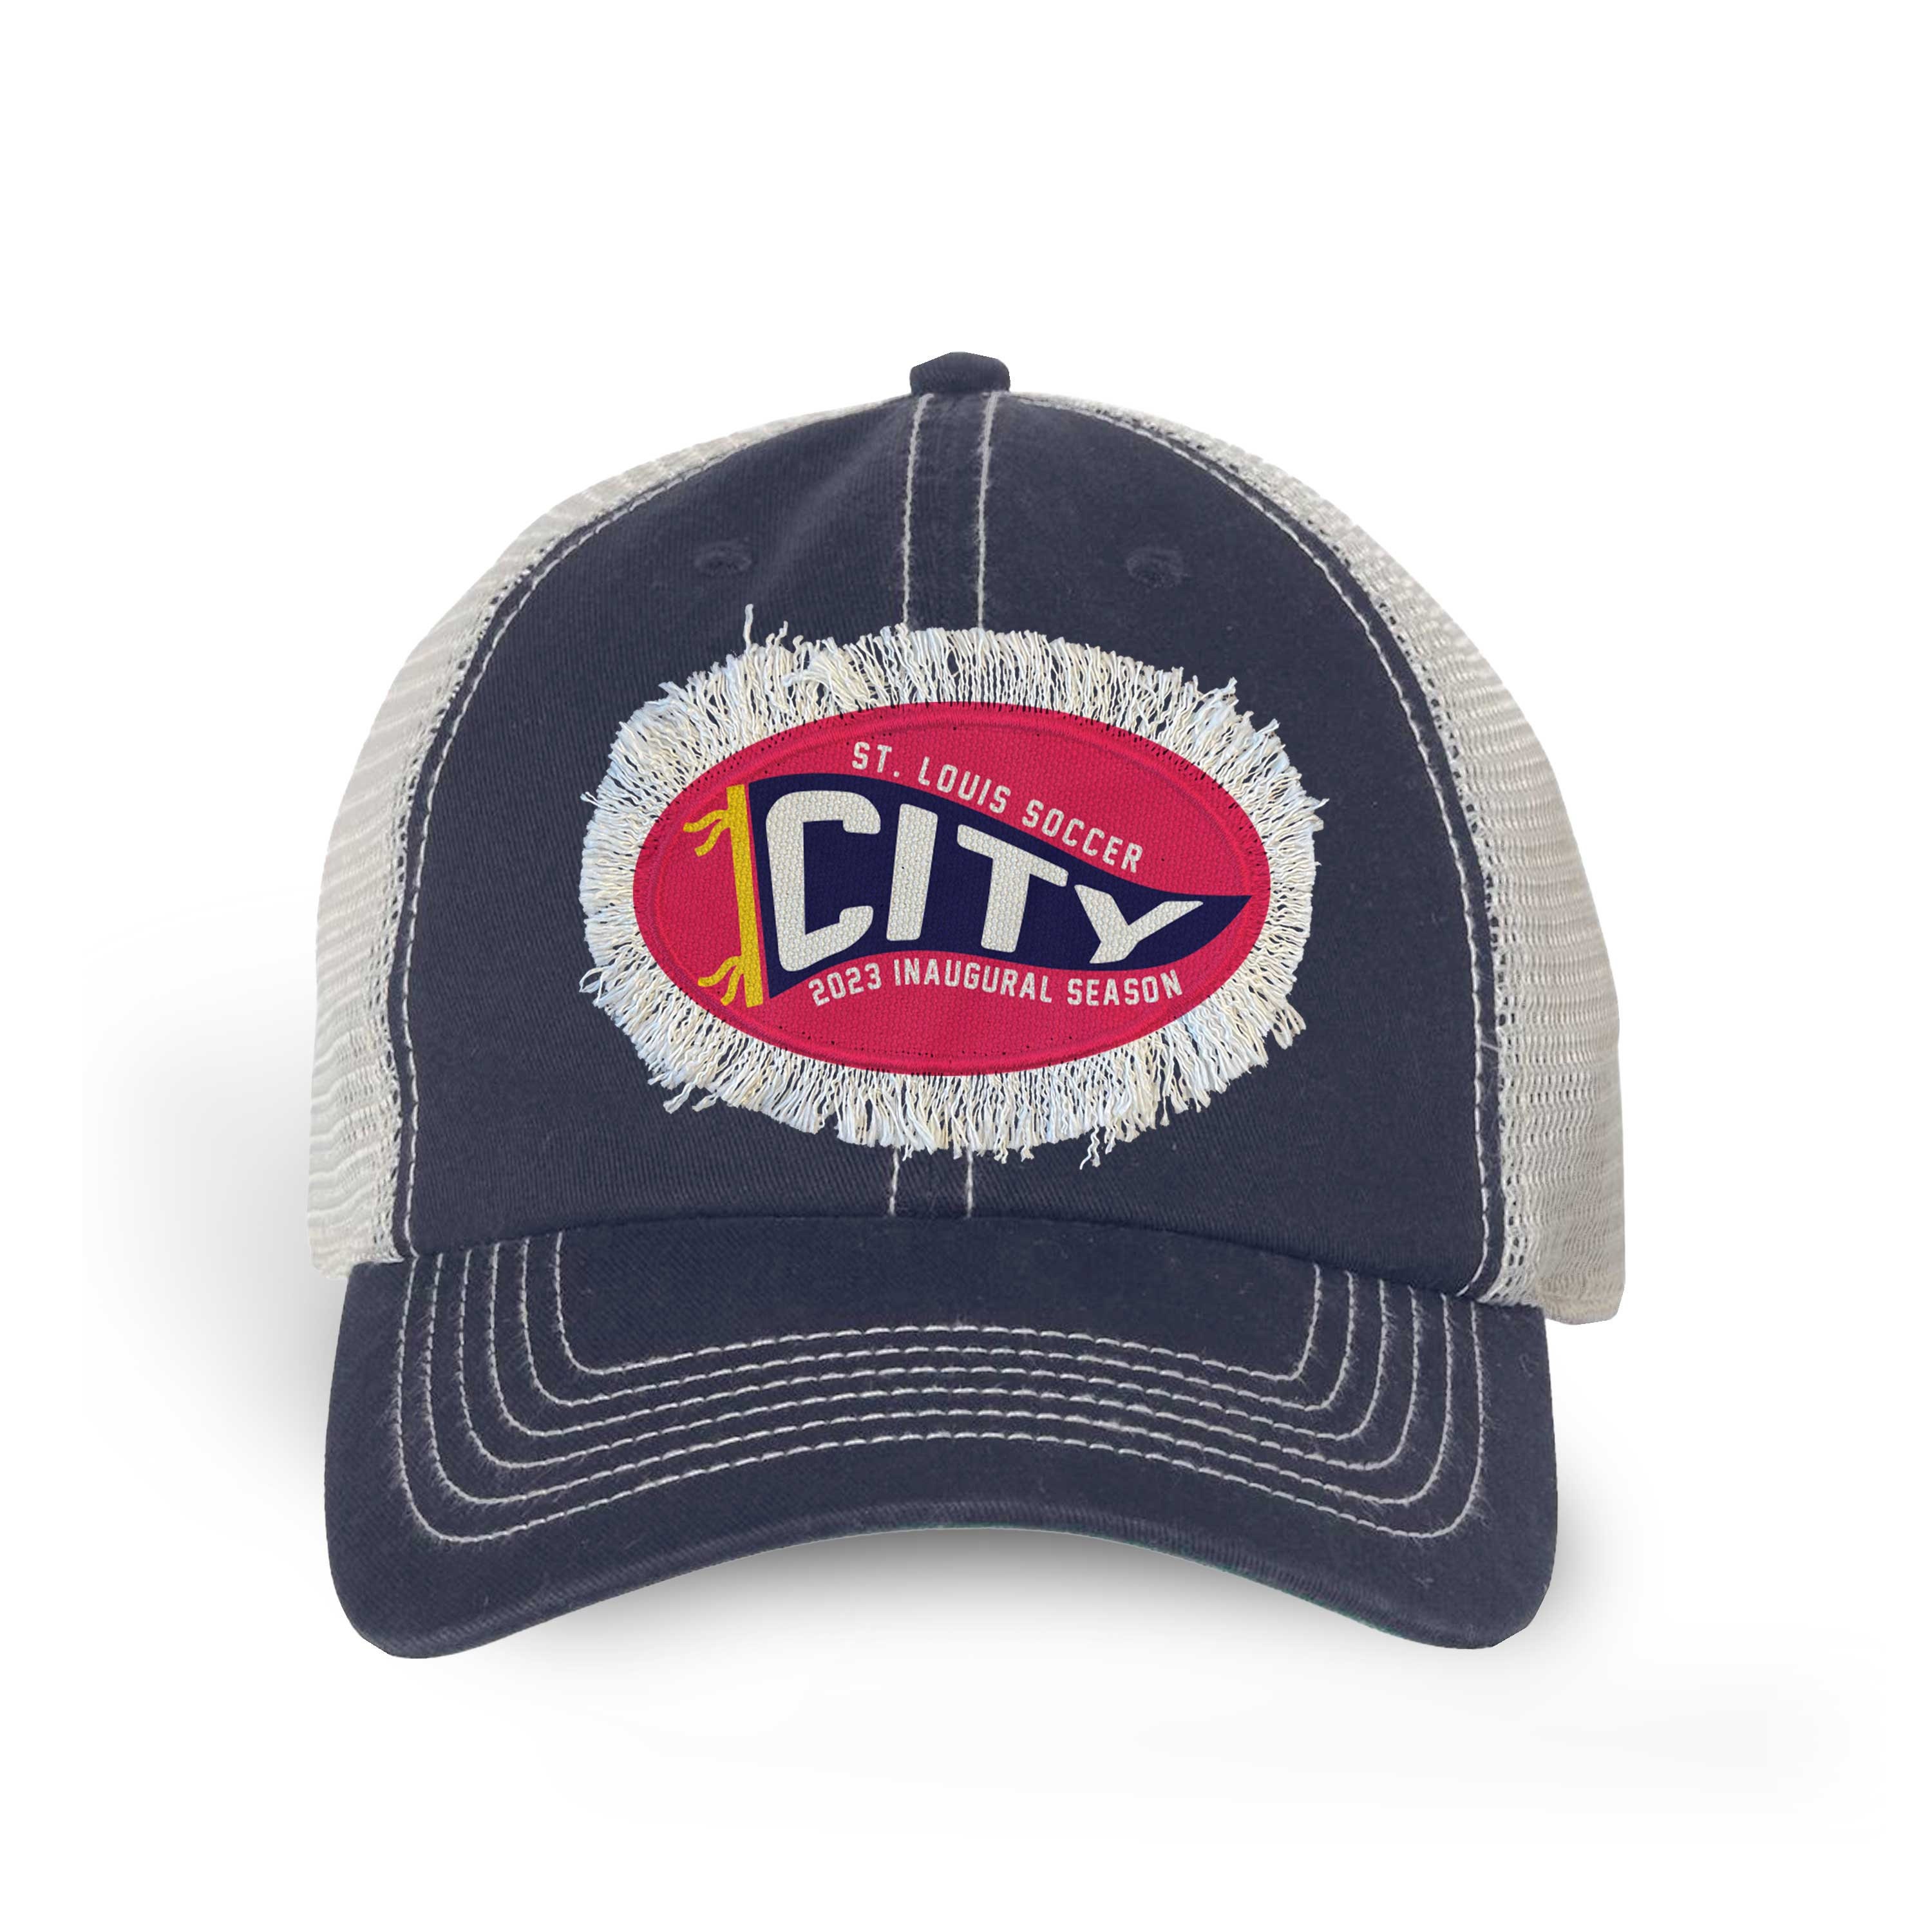 POOEDSO Flag of East St. Louis, Illinois Baseball Cap for Men Women  Adjustable Trucker Hat Cotton Cowboy Hats